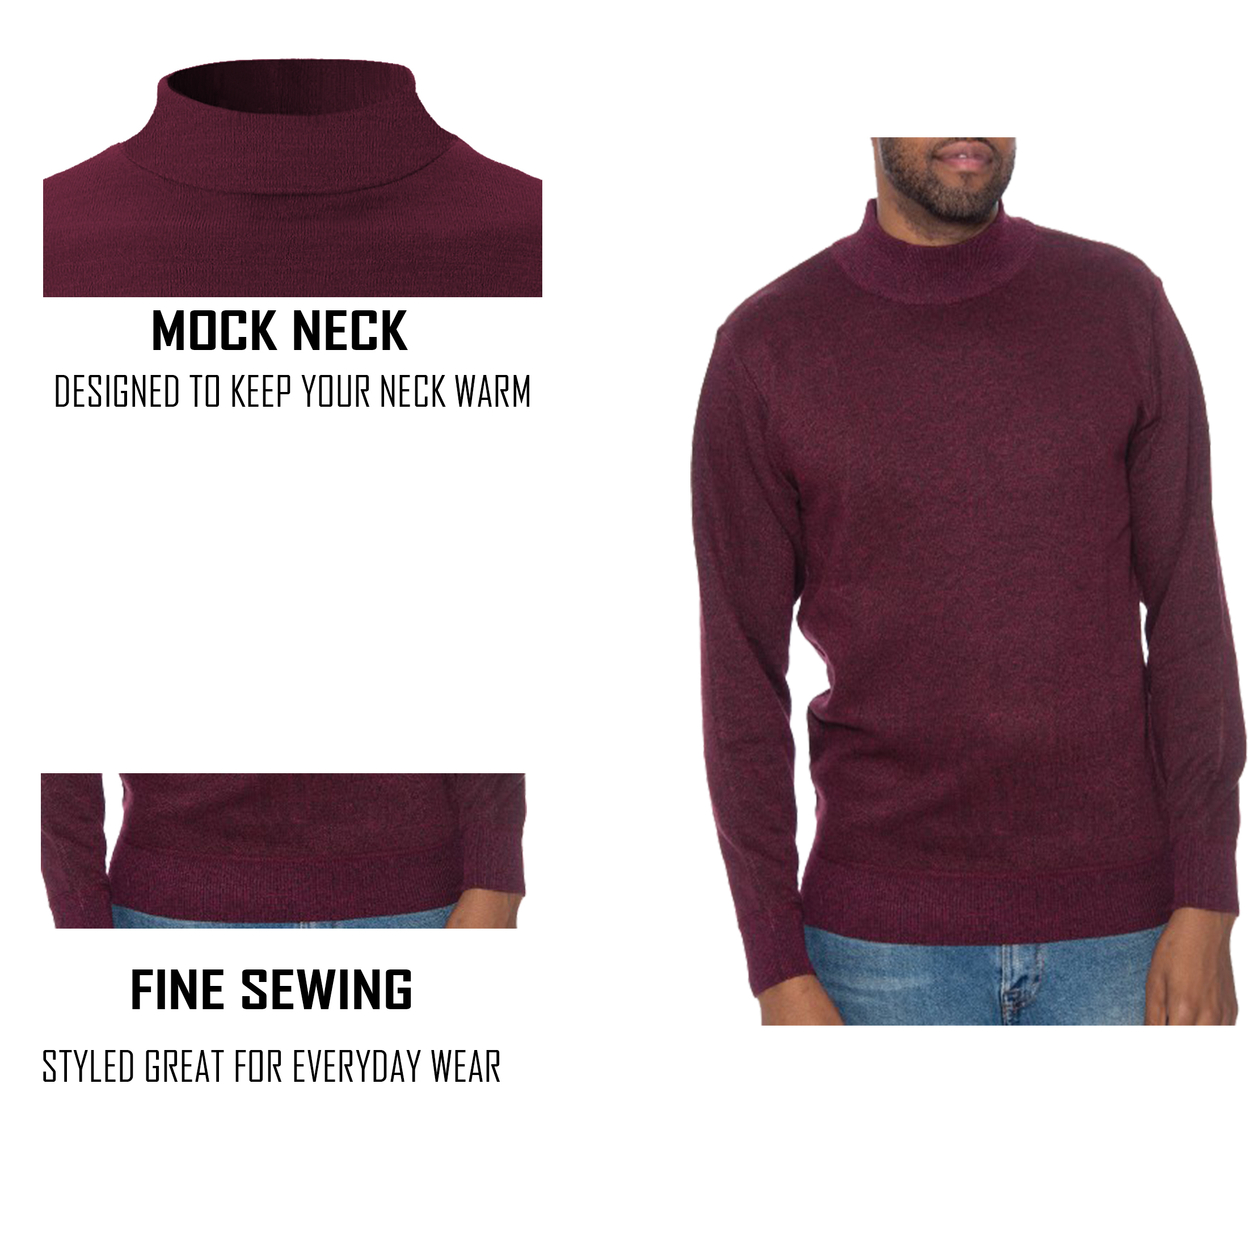 2-Pack: Men's Winter Warm Cozy Knit Slim Fit Mock Neck Sweater - Black & Charcoal, Xx-large